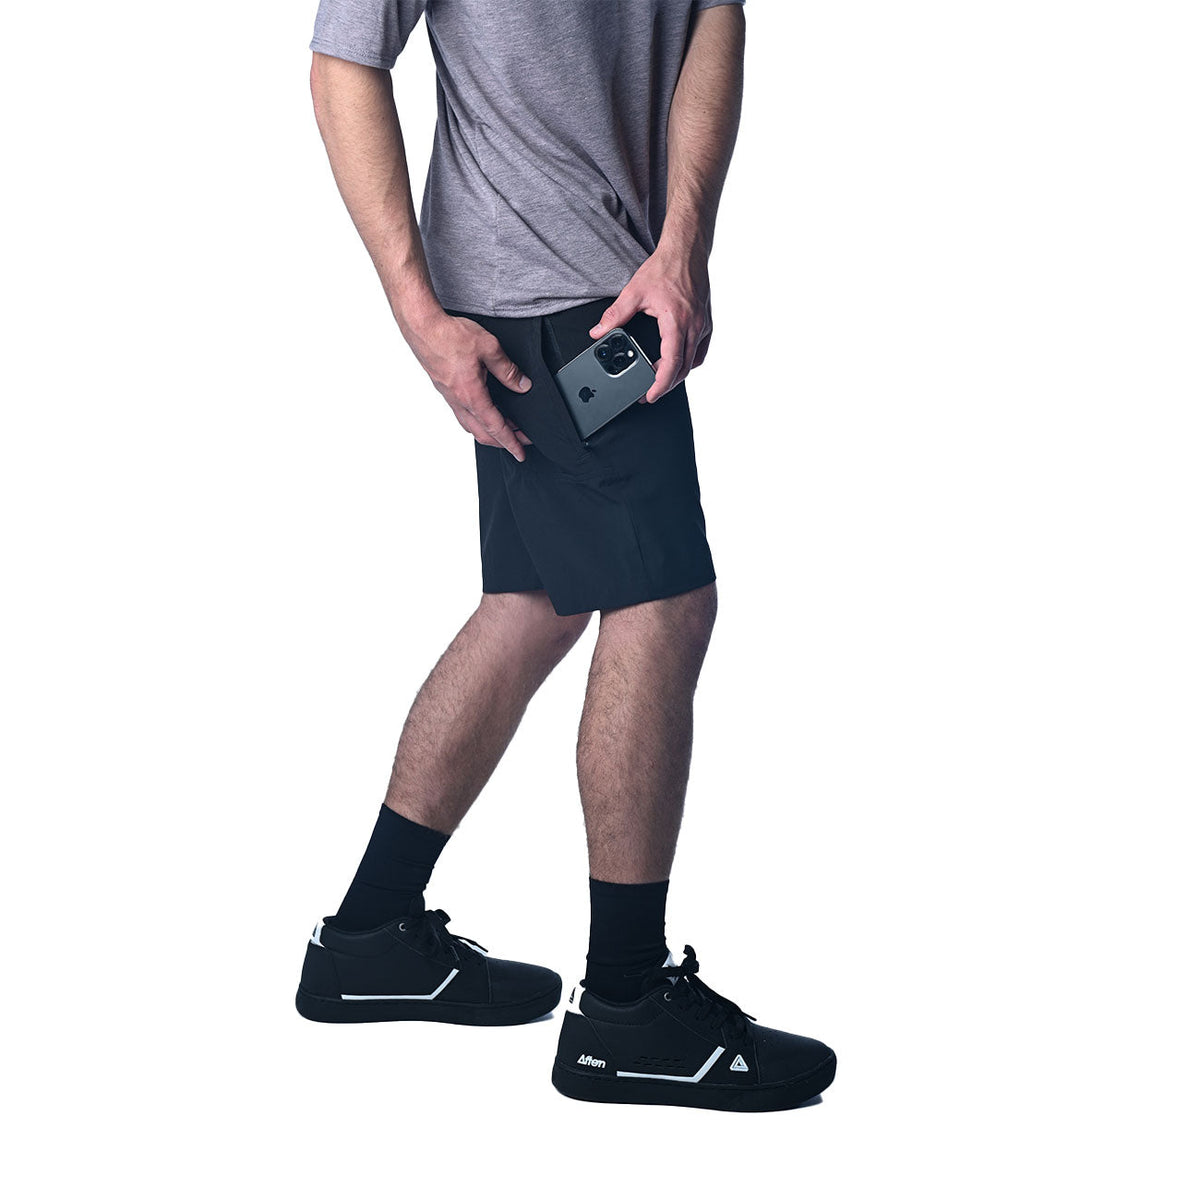 TASCO MTB Sessions hybrid MTB Shorts, black on body, phone pocket